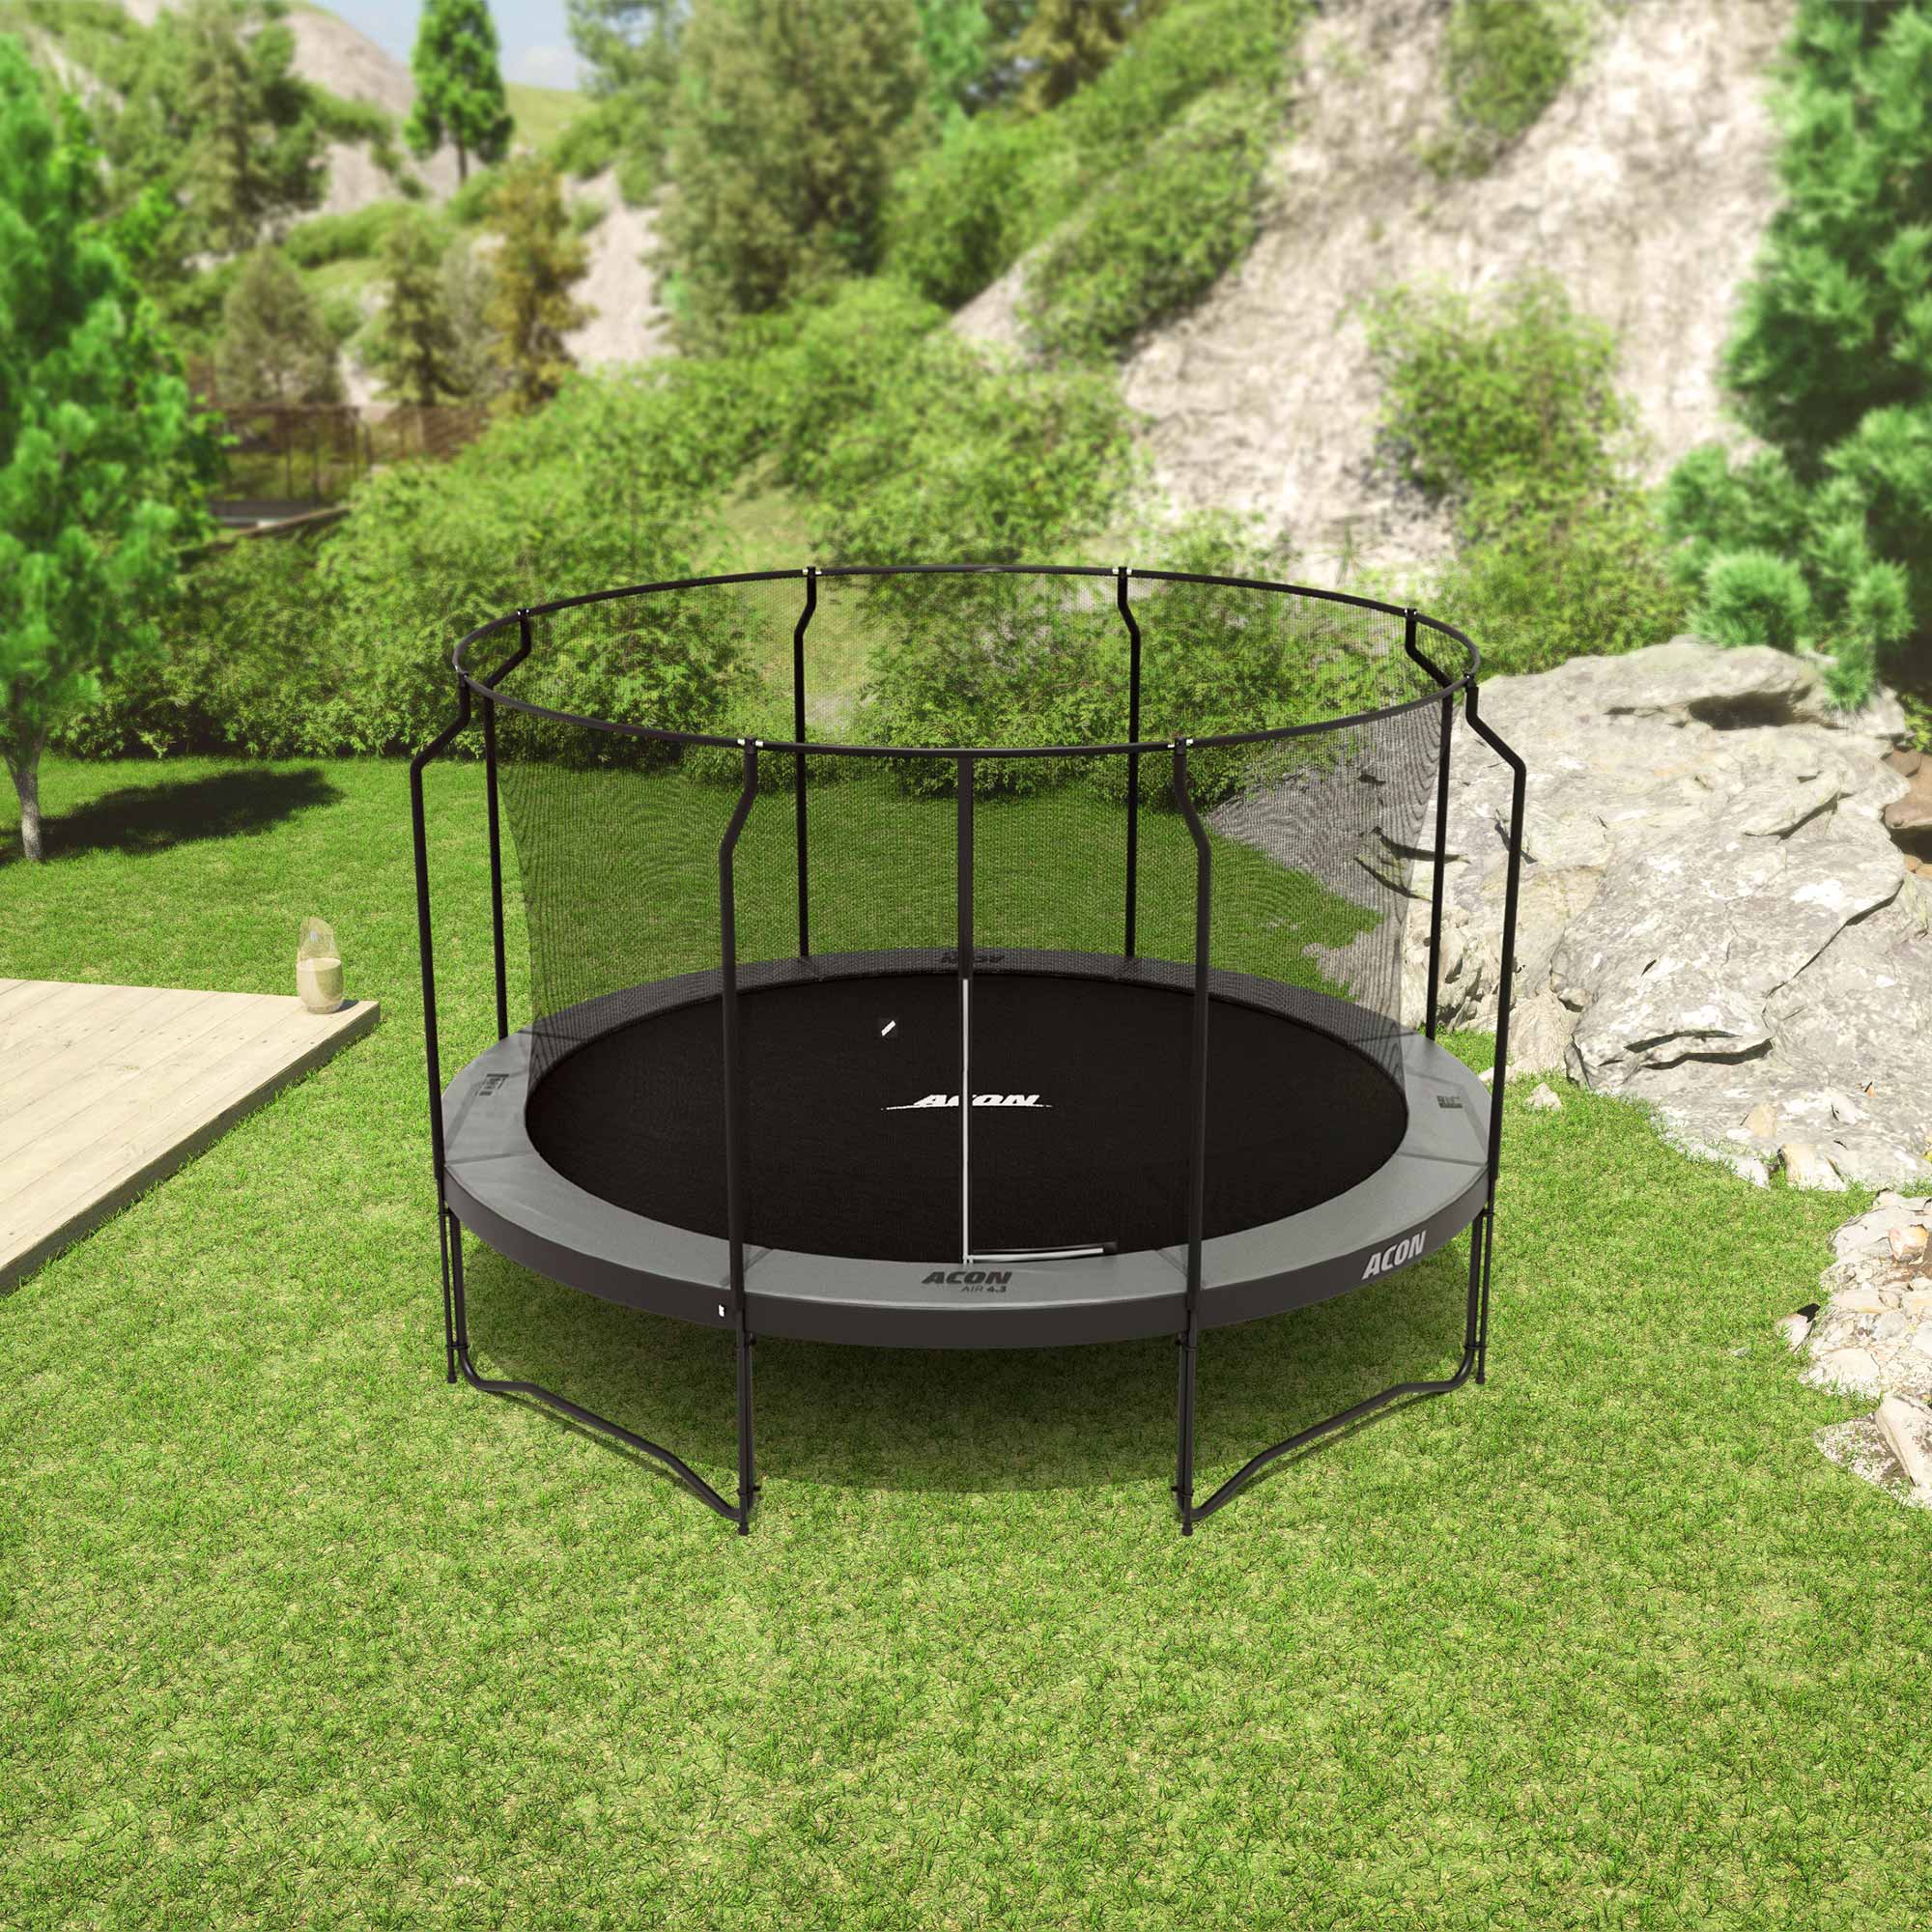 ACON Air 4,3m Trampoline Black with Premium Enclosure in the backyard.